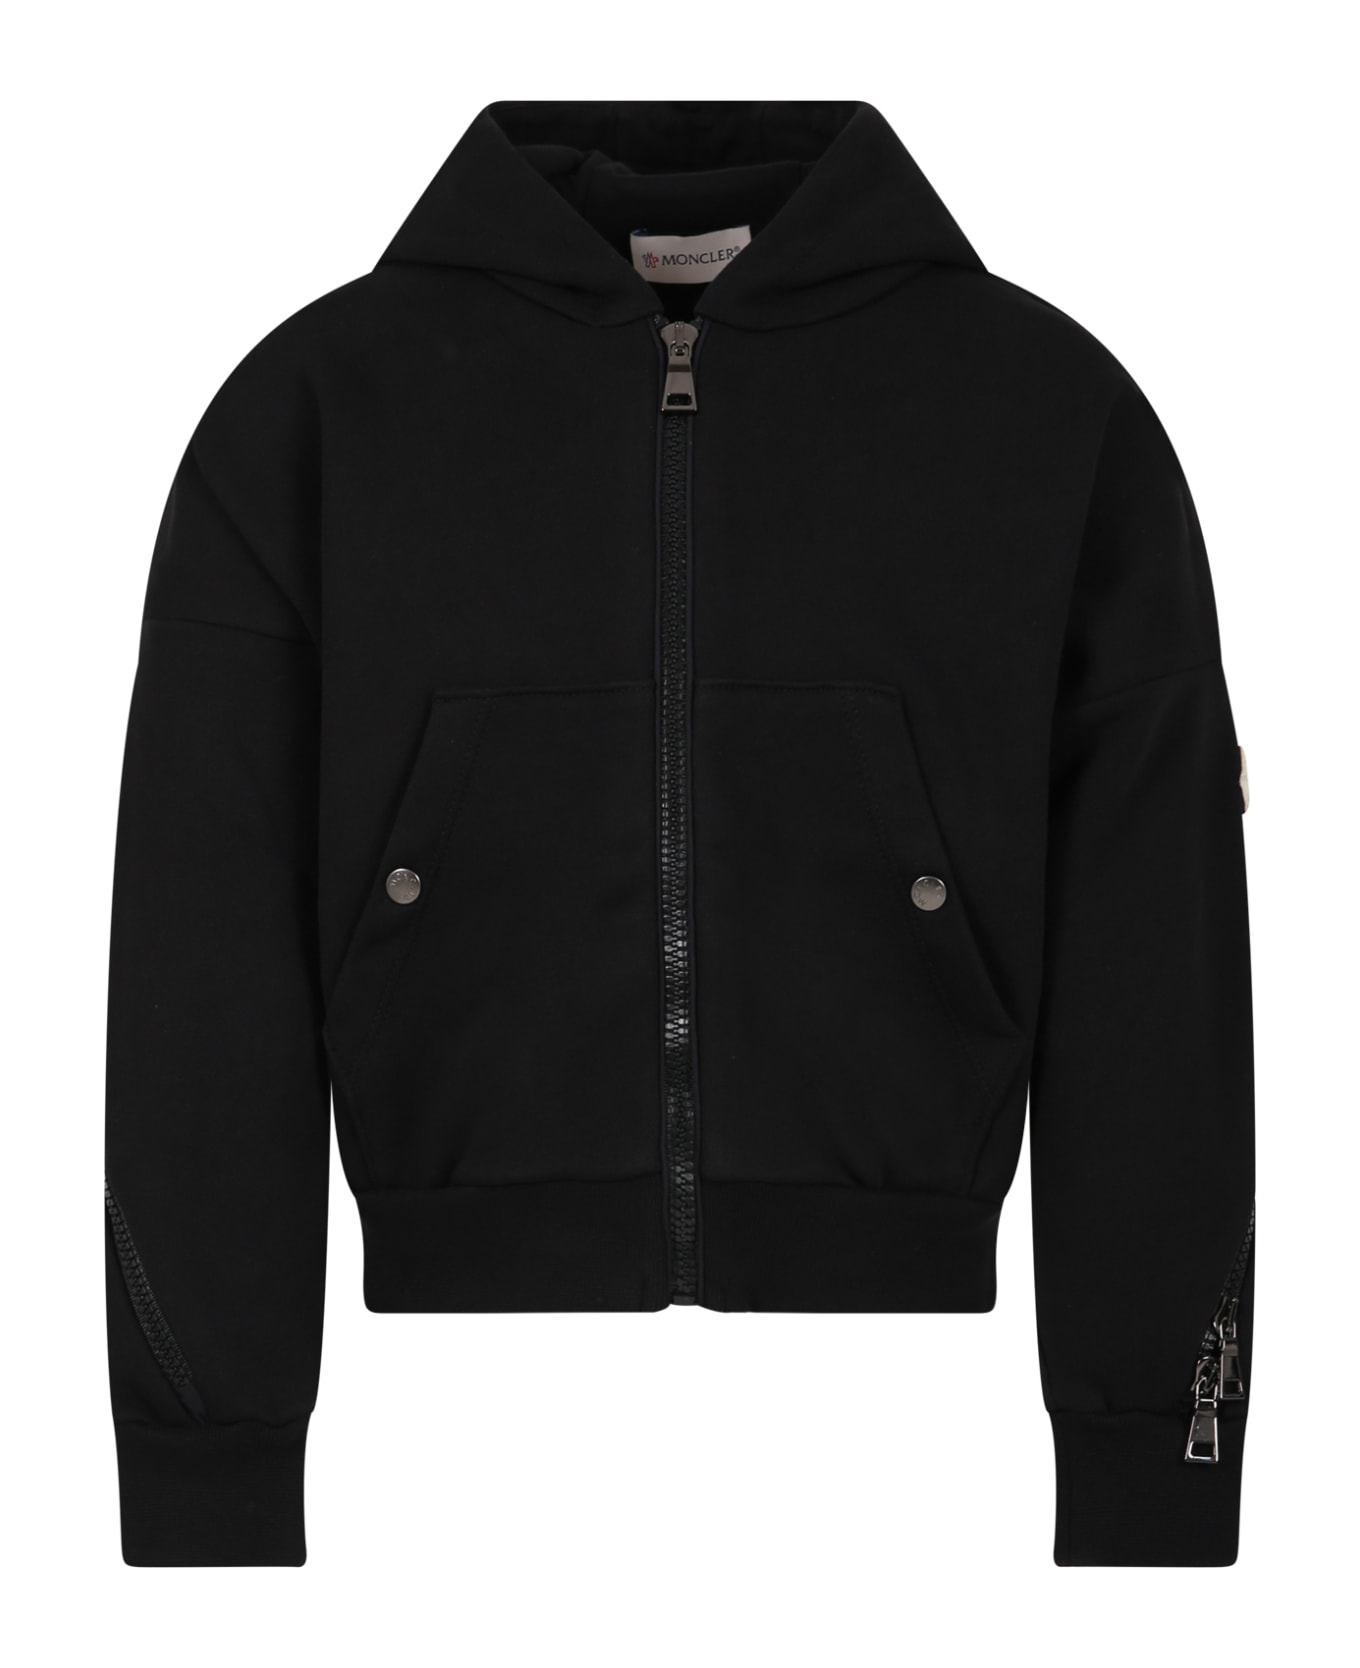 Moncler Black Sweatshirt For Girl - Black